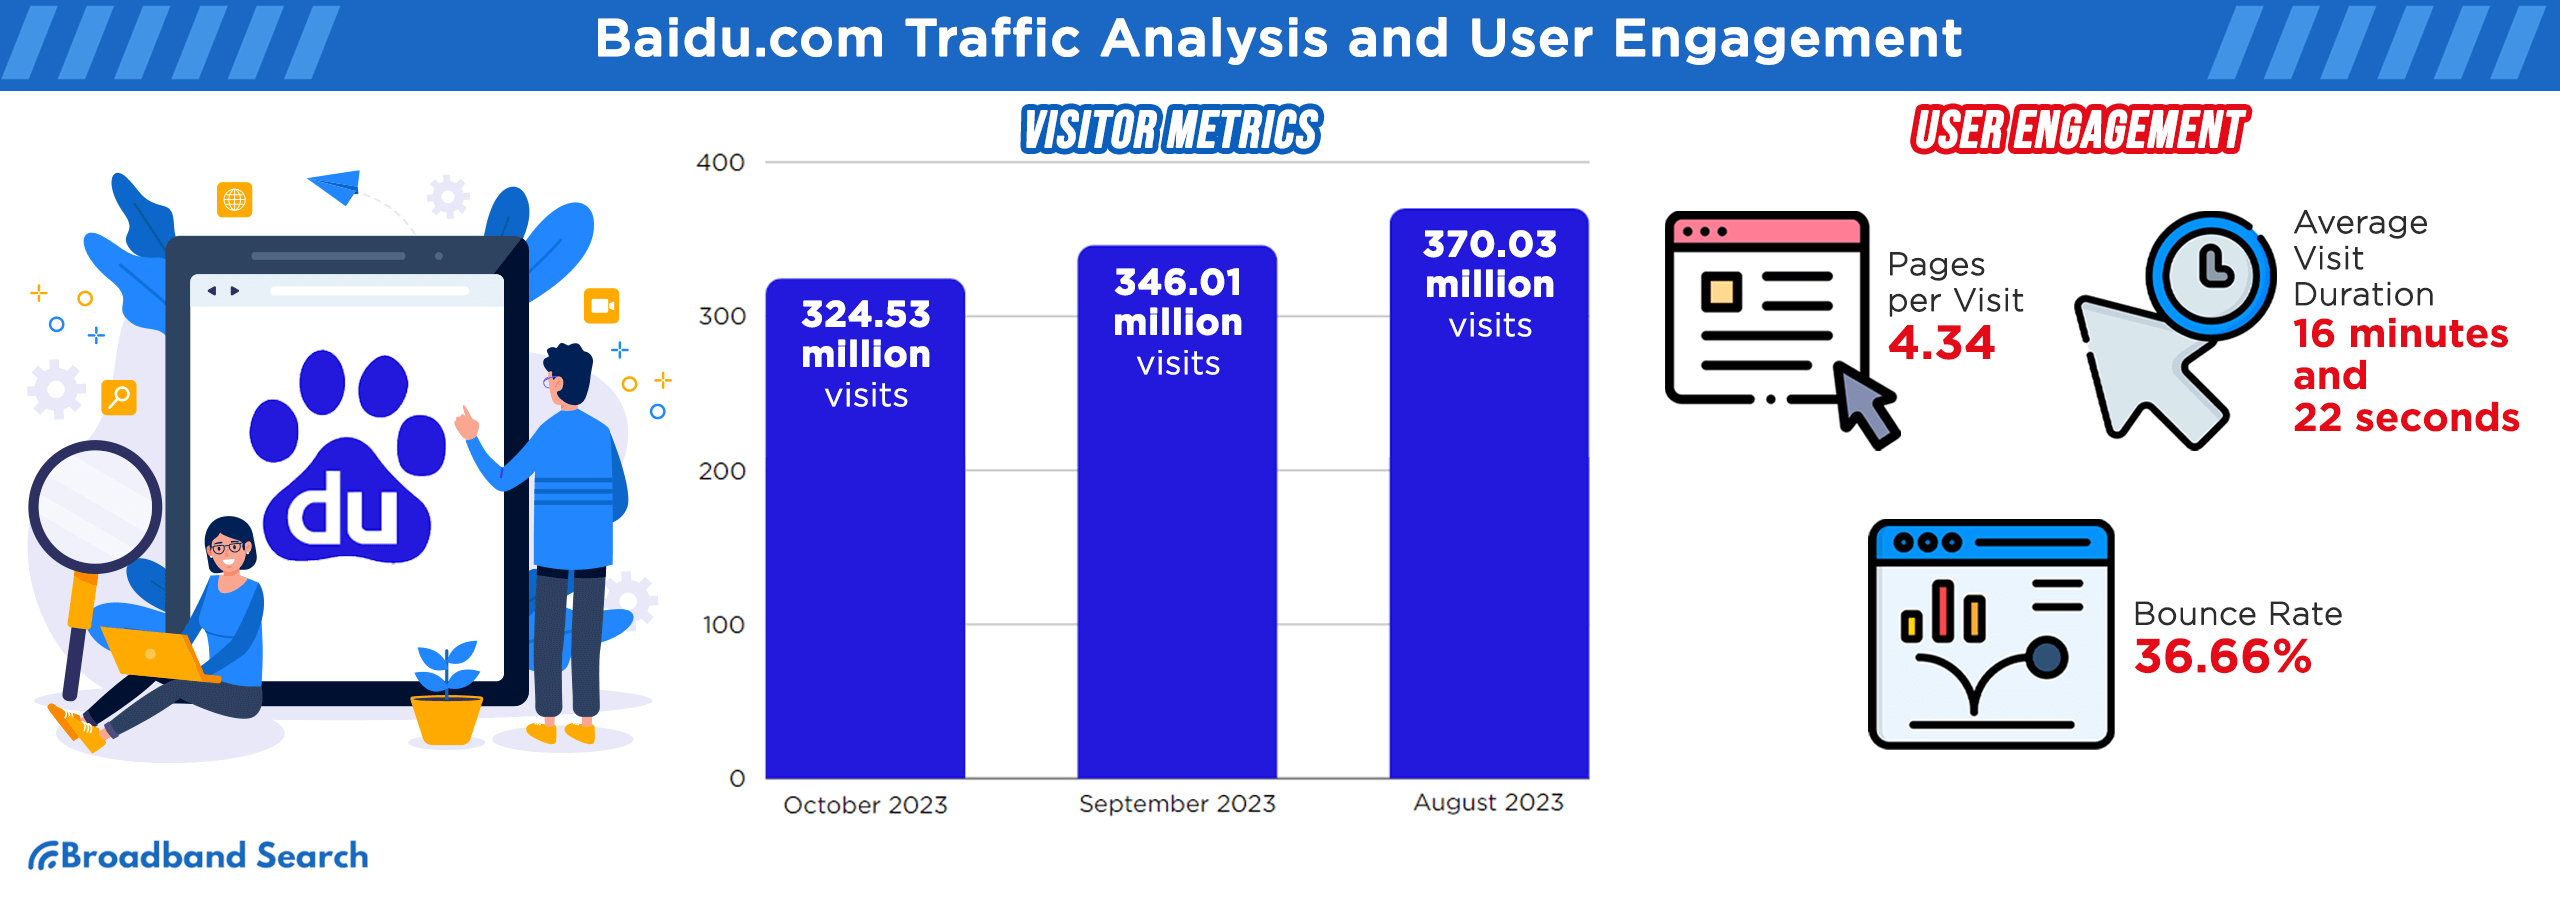 Baidu.com traffic analysis and user engagement